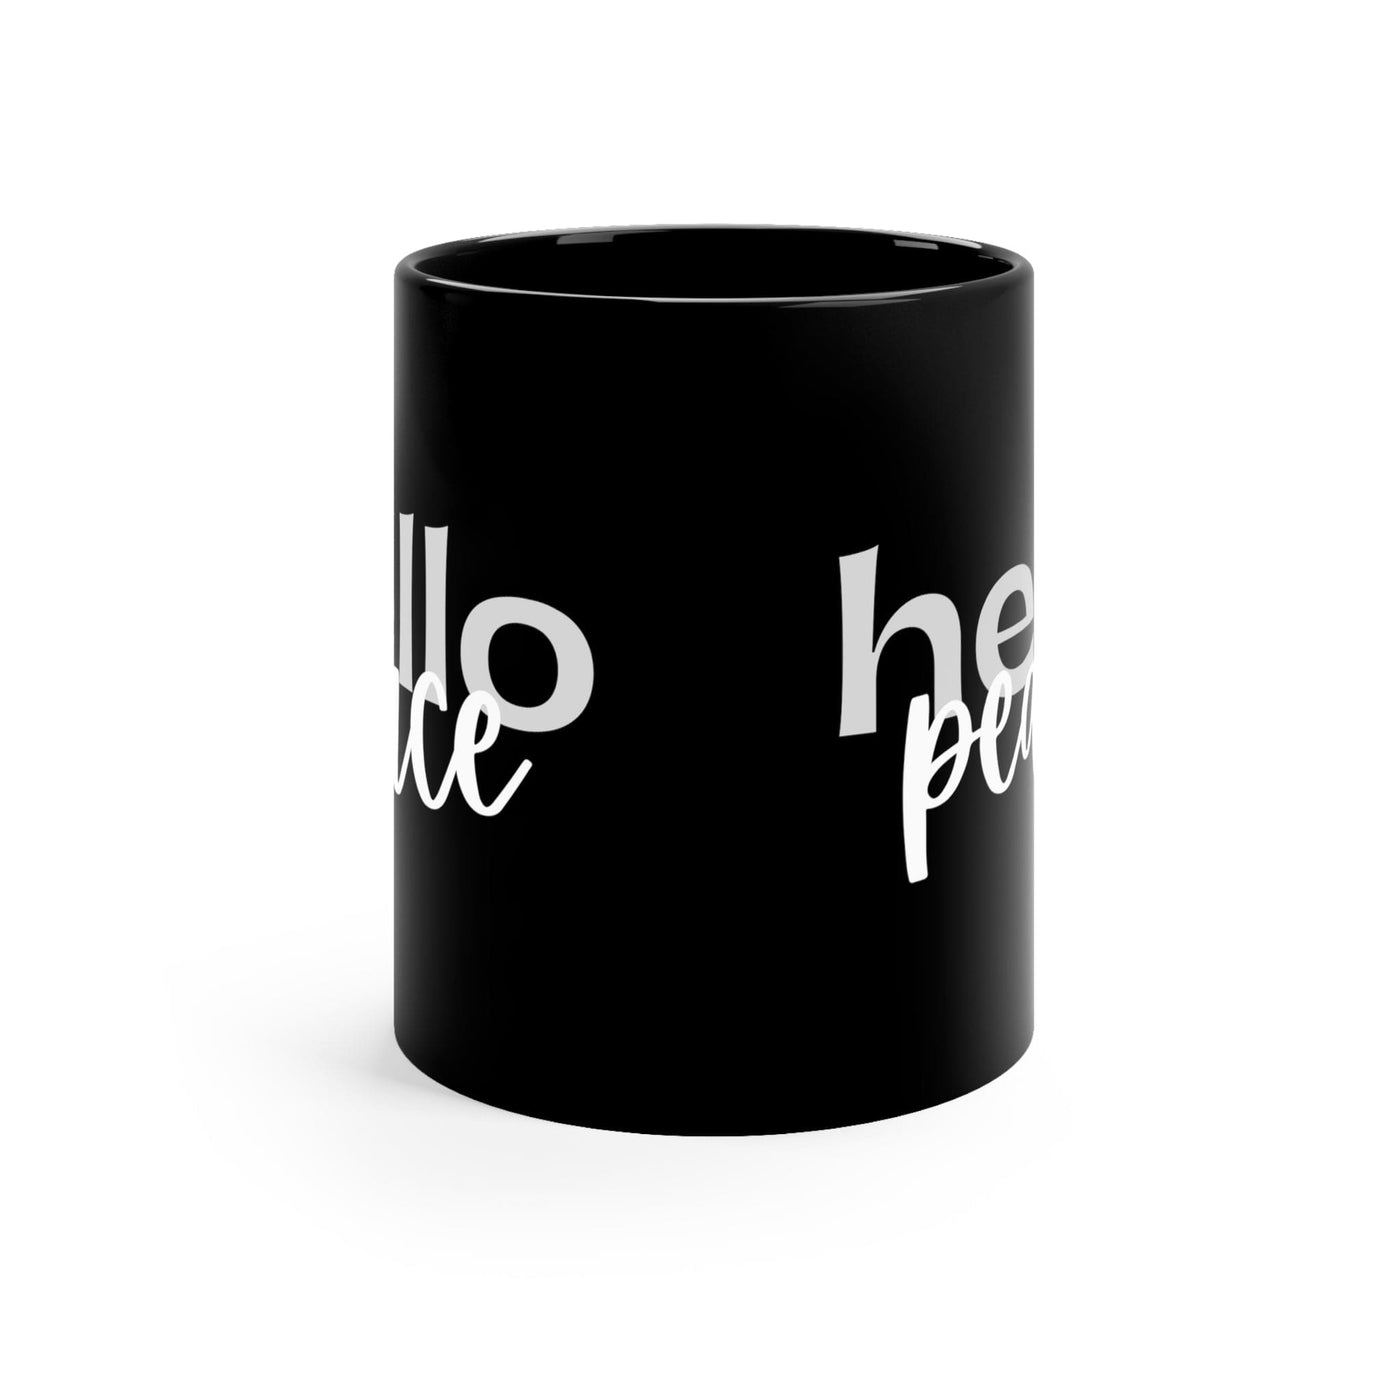 Black Ceramic Mug - 11oz Hello Peace Motivational Peaceful Aspiration